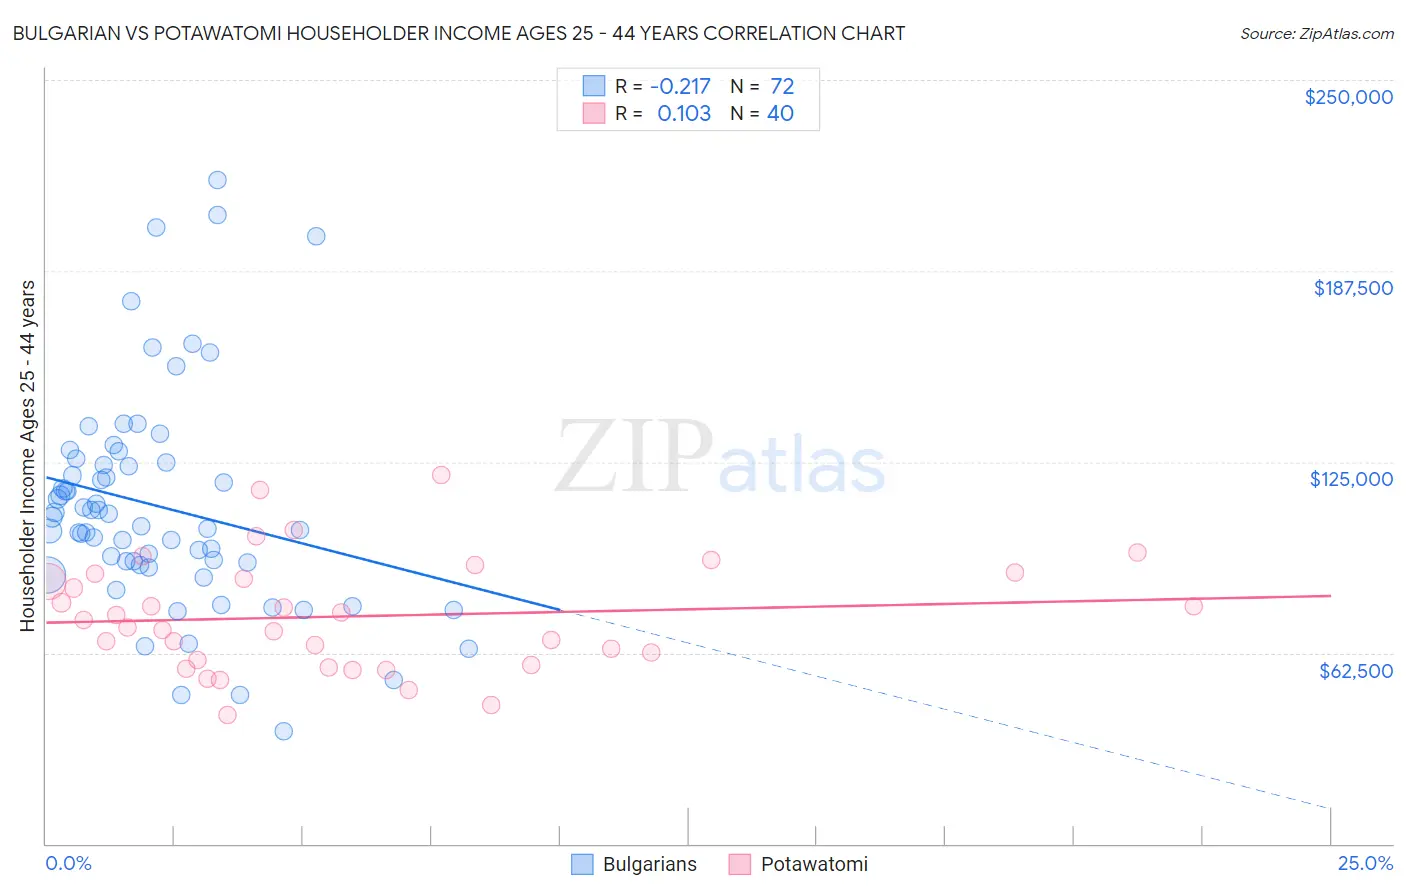 Bulgarian vs Potawatomi Householder Income Ages 25 - 44 years